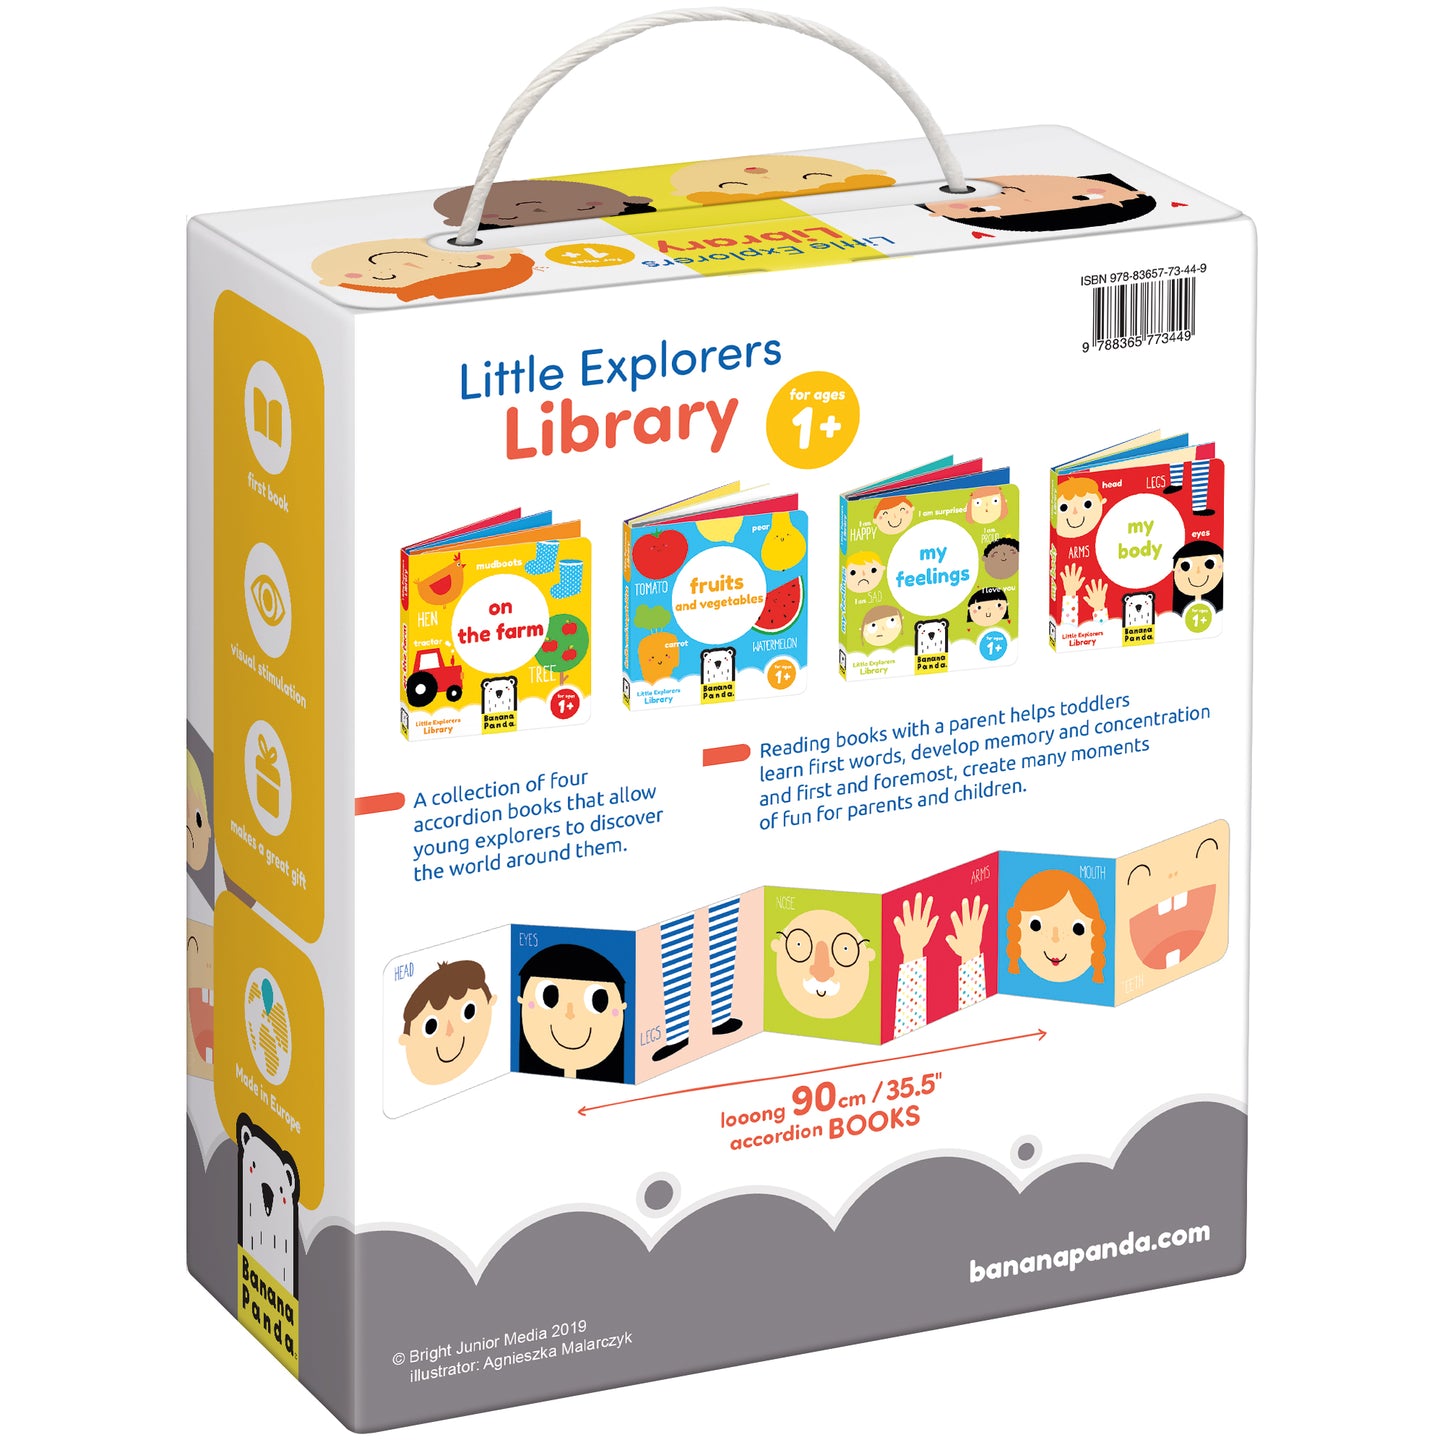 Banana Panda - Little Explorers Library Books 1+